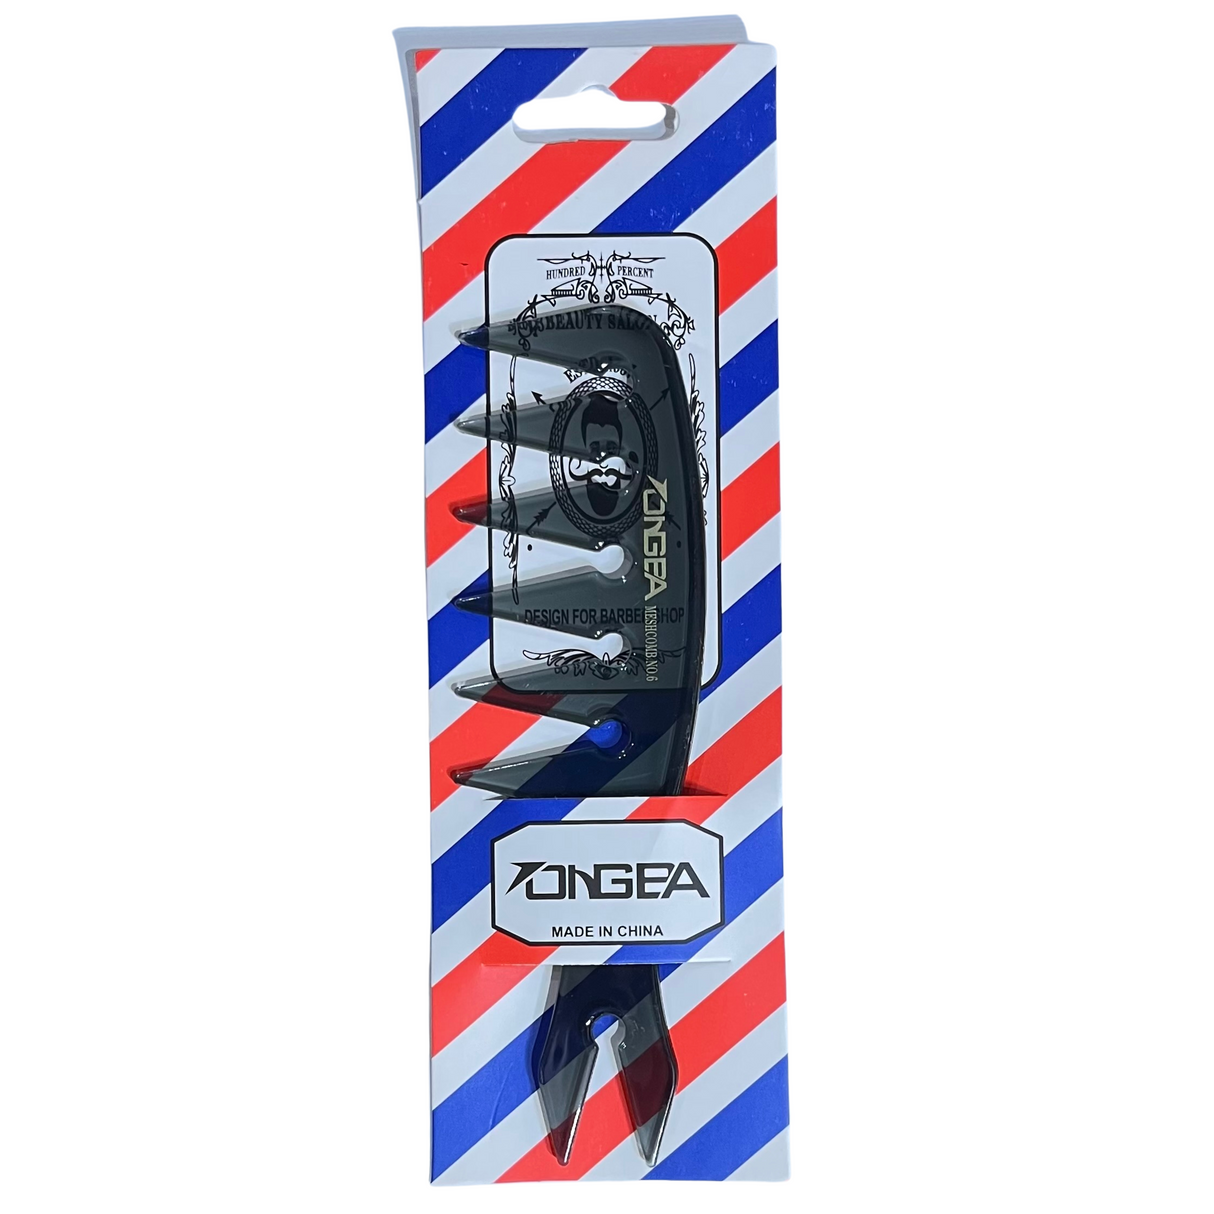 ONGBA - Professional Hair Comb N6